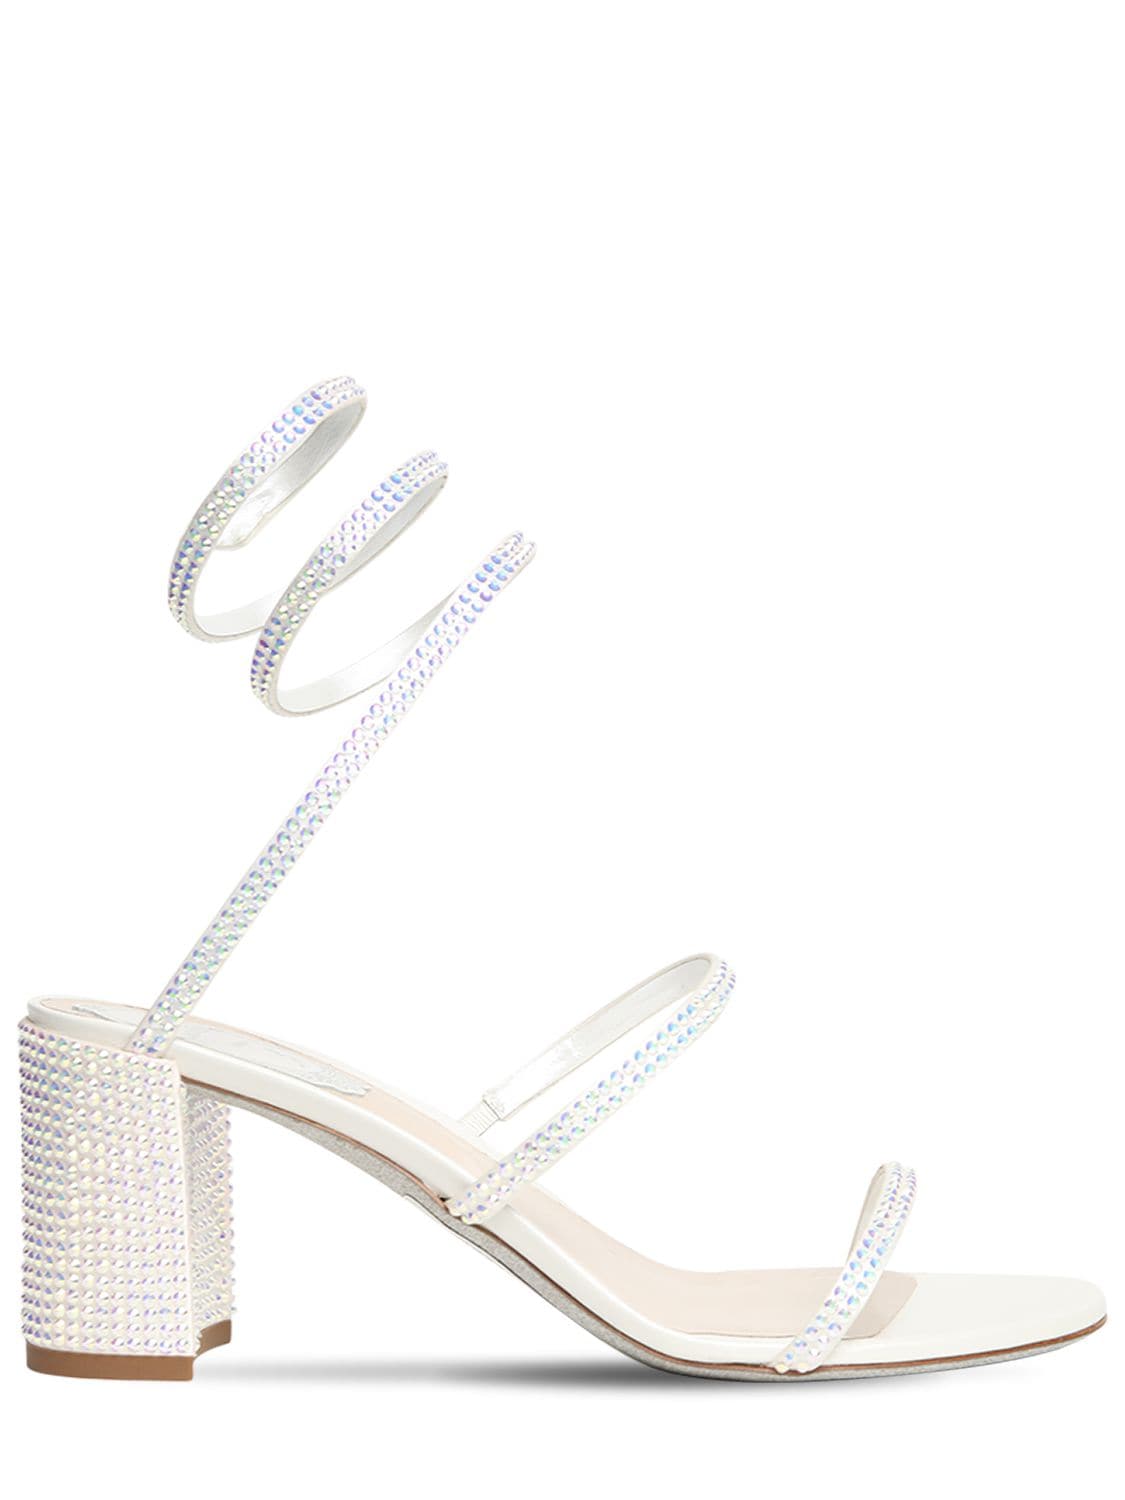 René Caovilla 65mm Embellished Satin Sandals In White